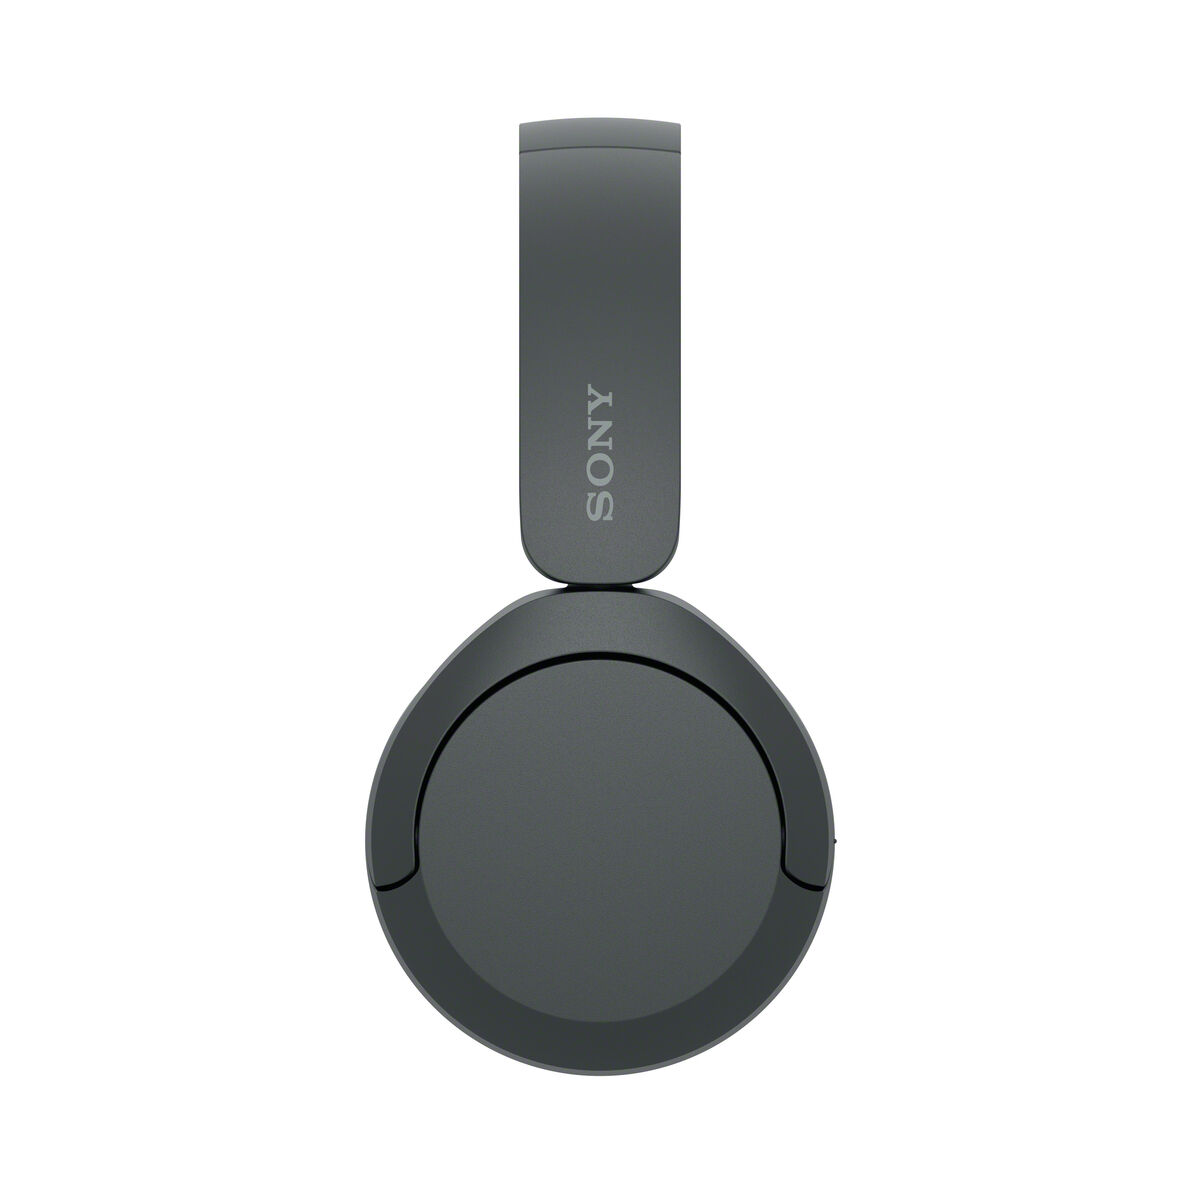 Auscultadores Bluetooth Sony Whch520b - Headphones sem fio | Sport Zone MKP